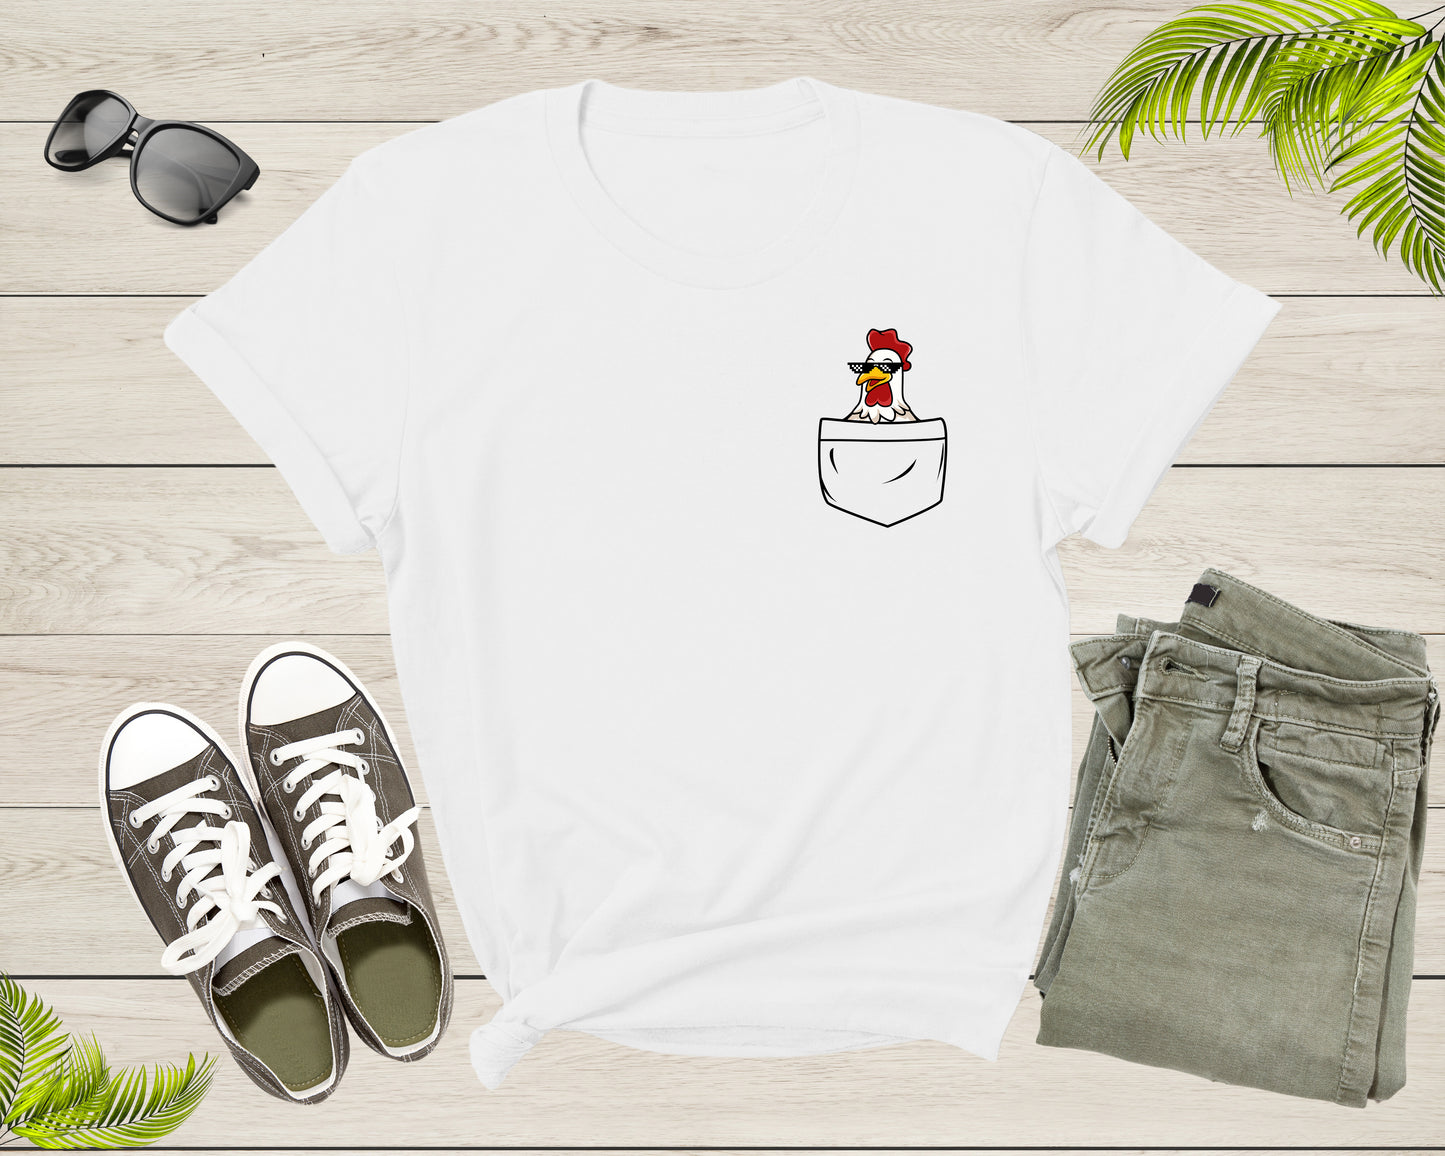 Cool Chicken Hen Rooster in Pocket with Meme Sunglasses T-Shirt Pocket Chicken Shirt for Men Women Kids Boys Girls Teens Graphic Tshirt